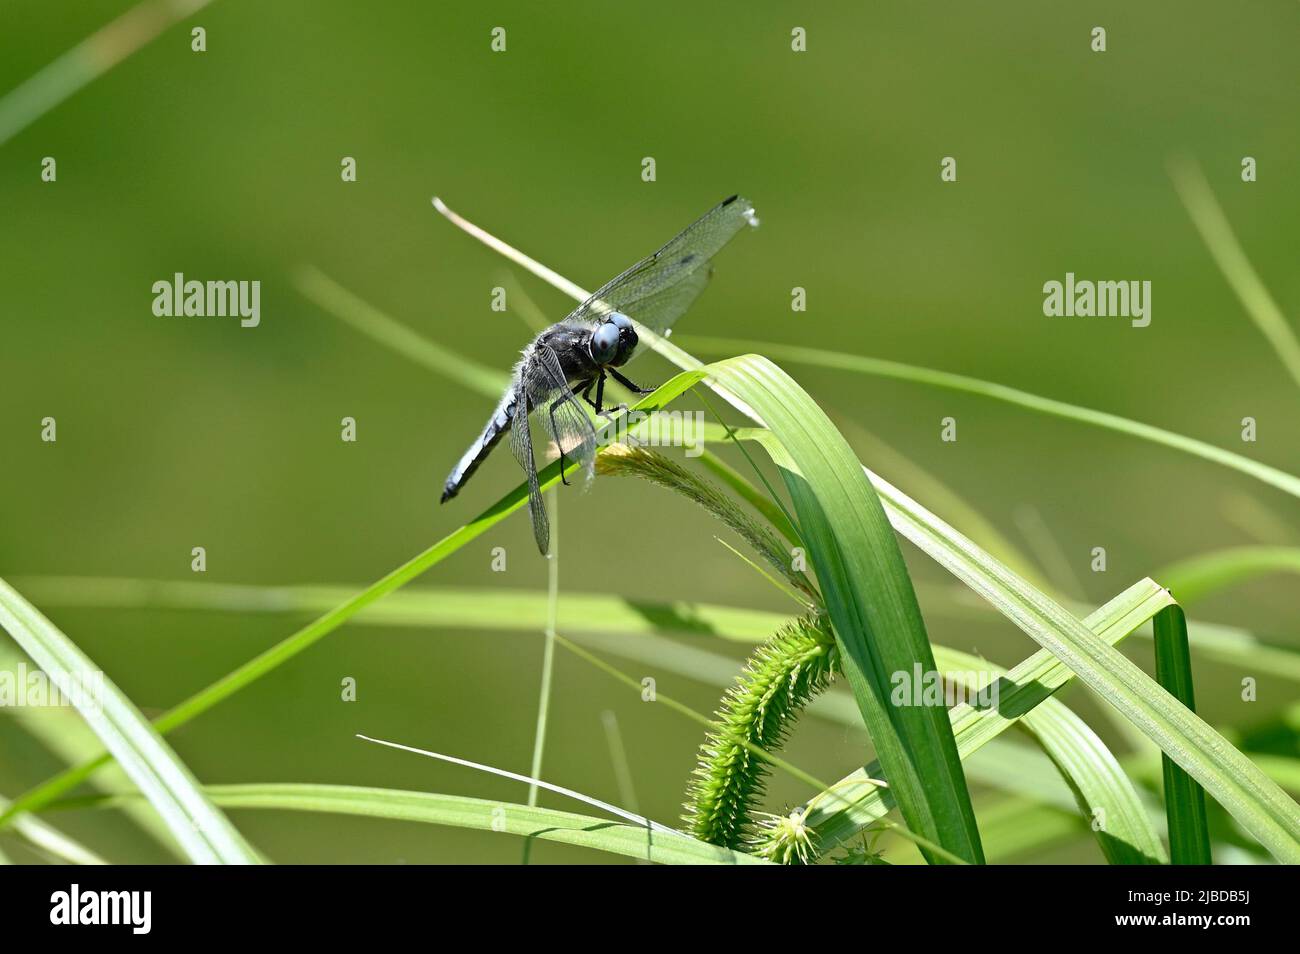 Dragonfly (Odonata) on a blade of grass Stock Photo